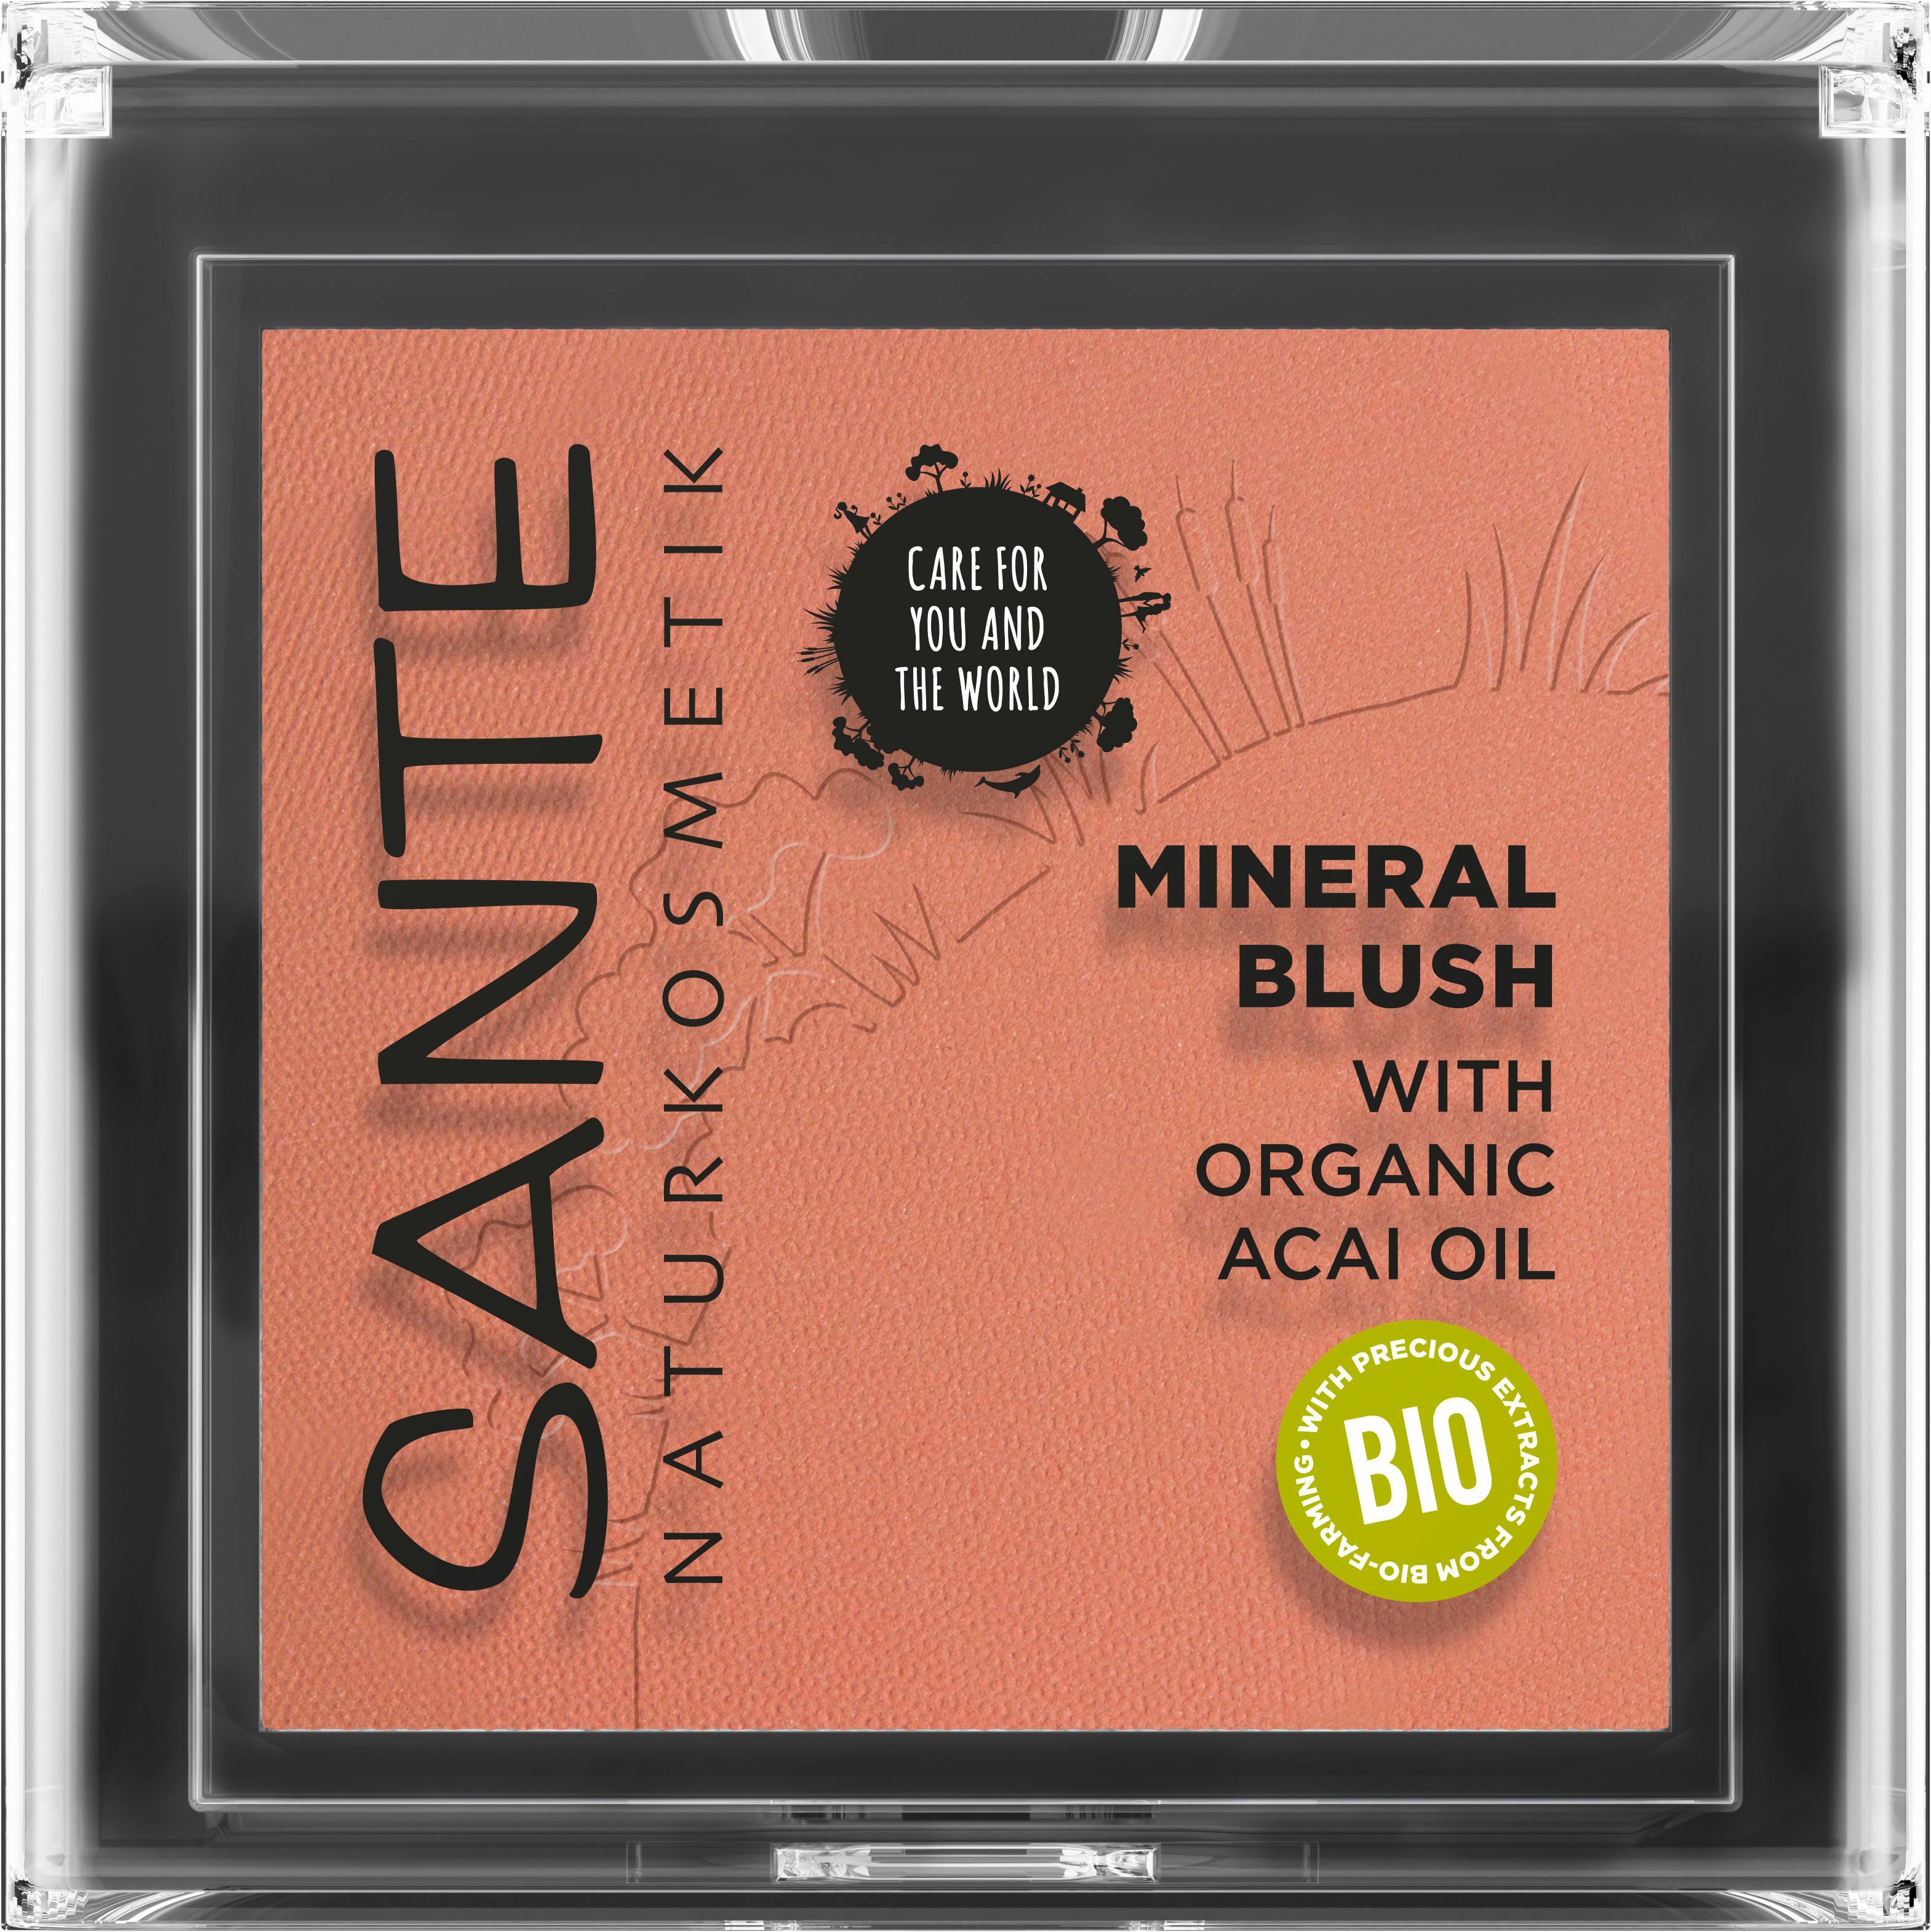 SANTE Coral Rouge Bronze Sante Mineral Blush 02